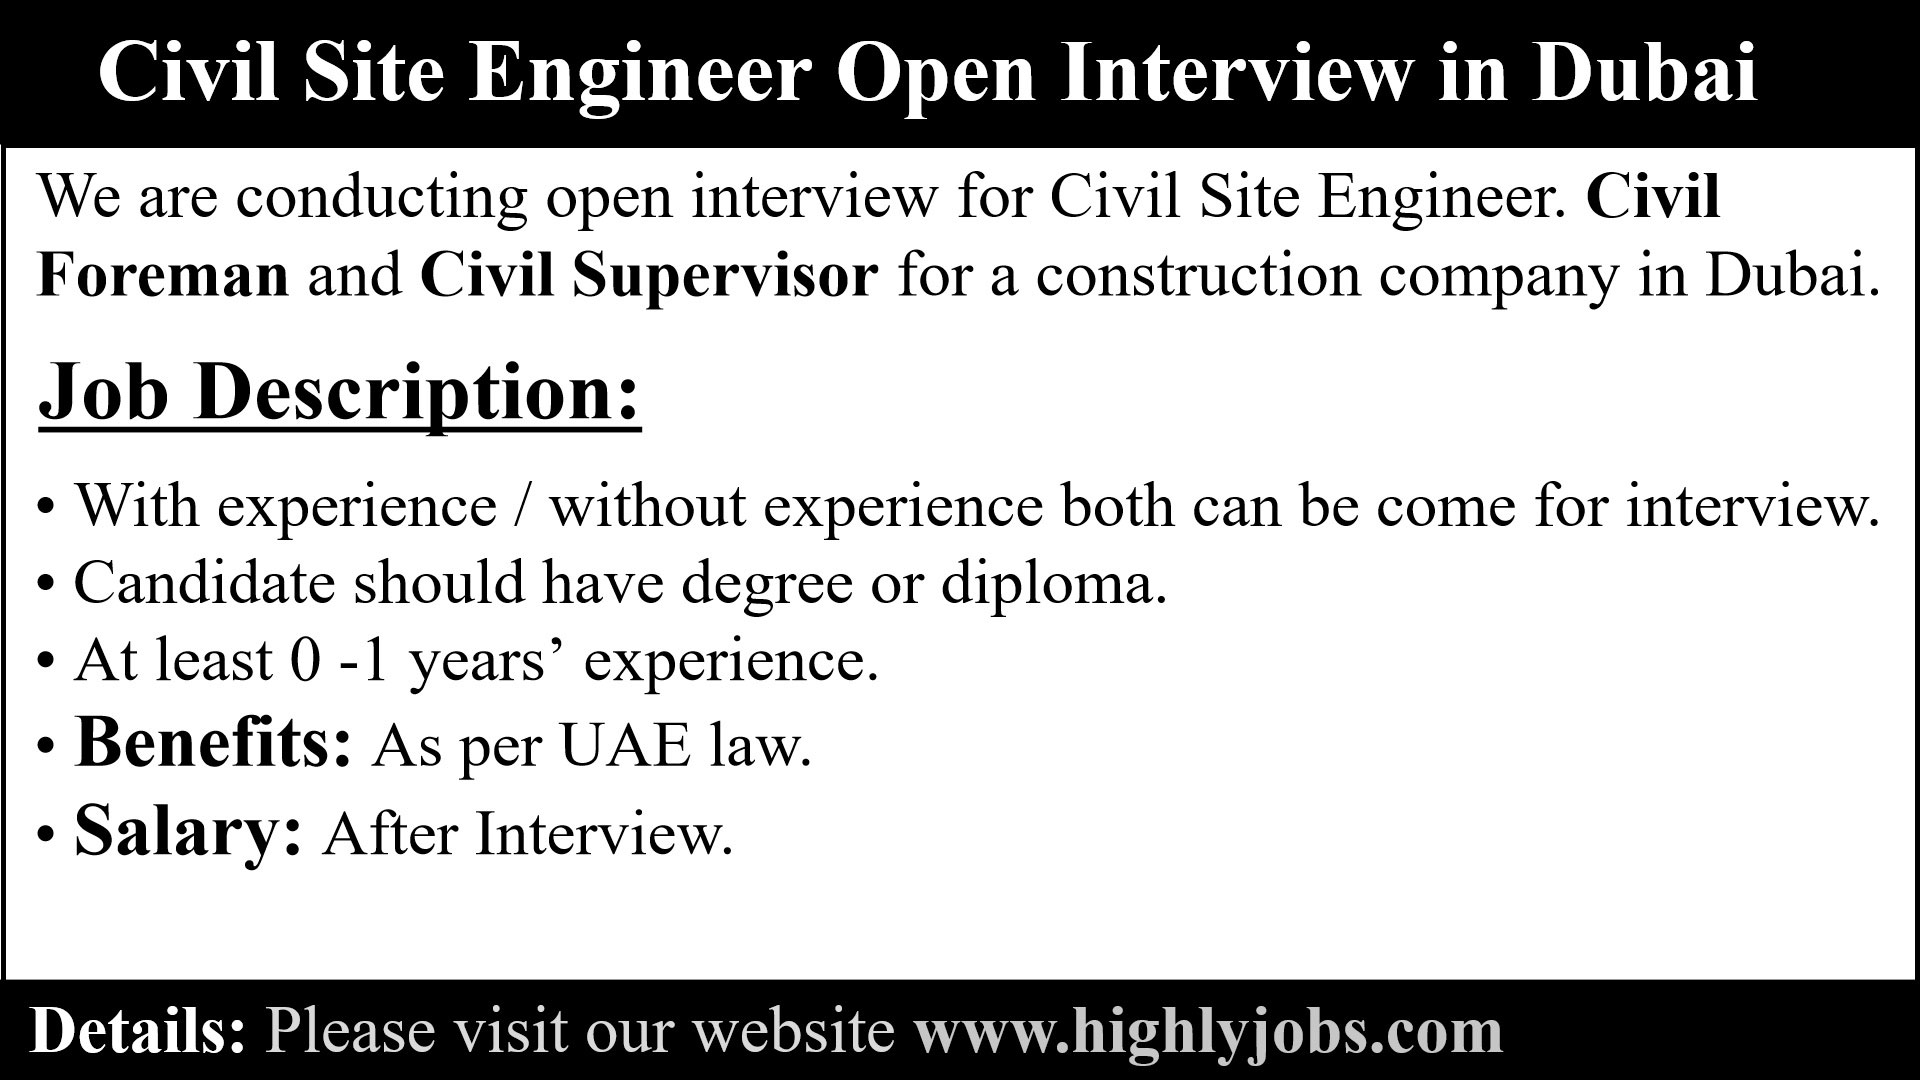 Civil Site Engineer Open Interview in Dubai